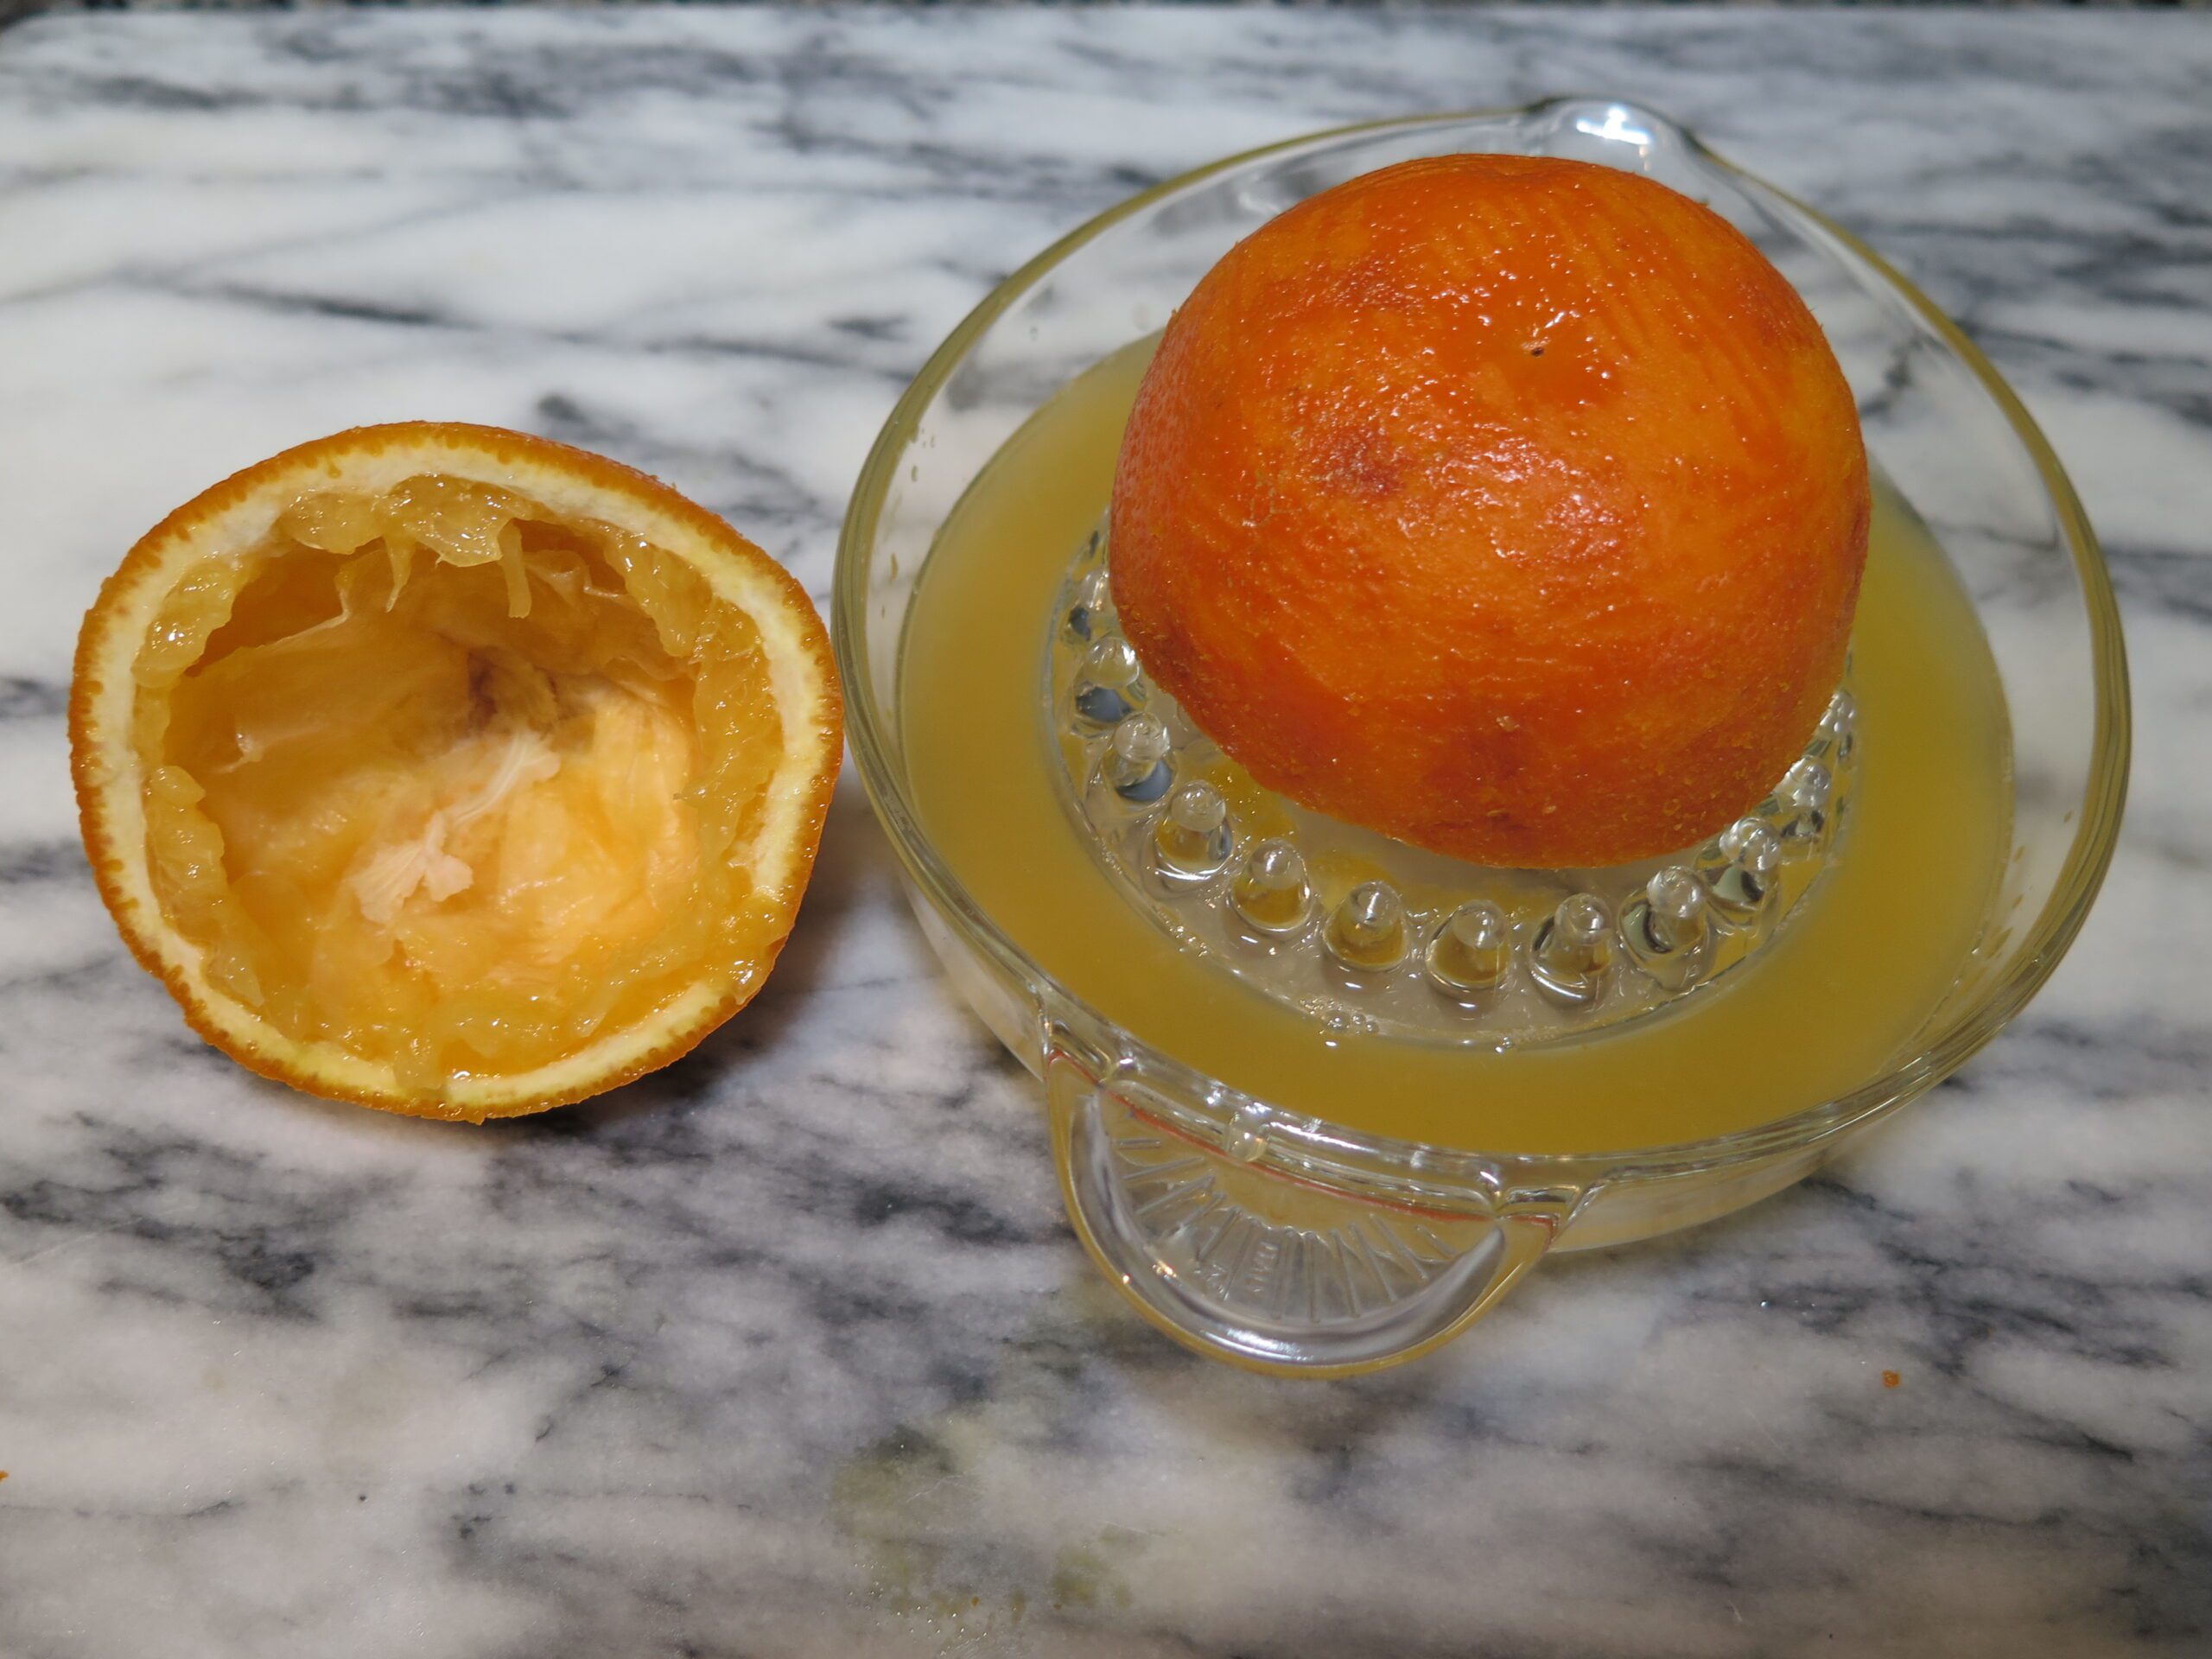 Orange being juiced for recipe